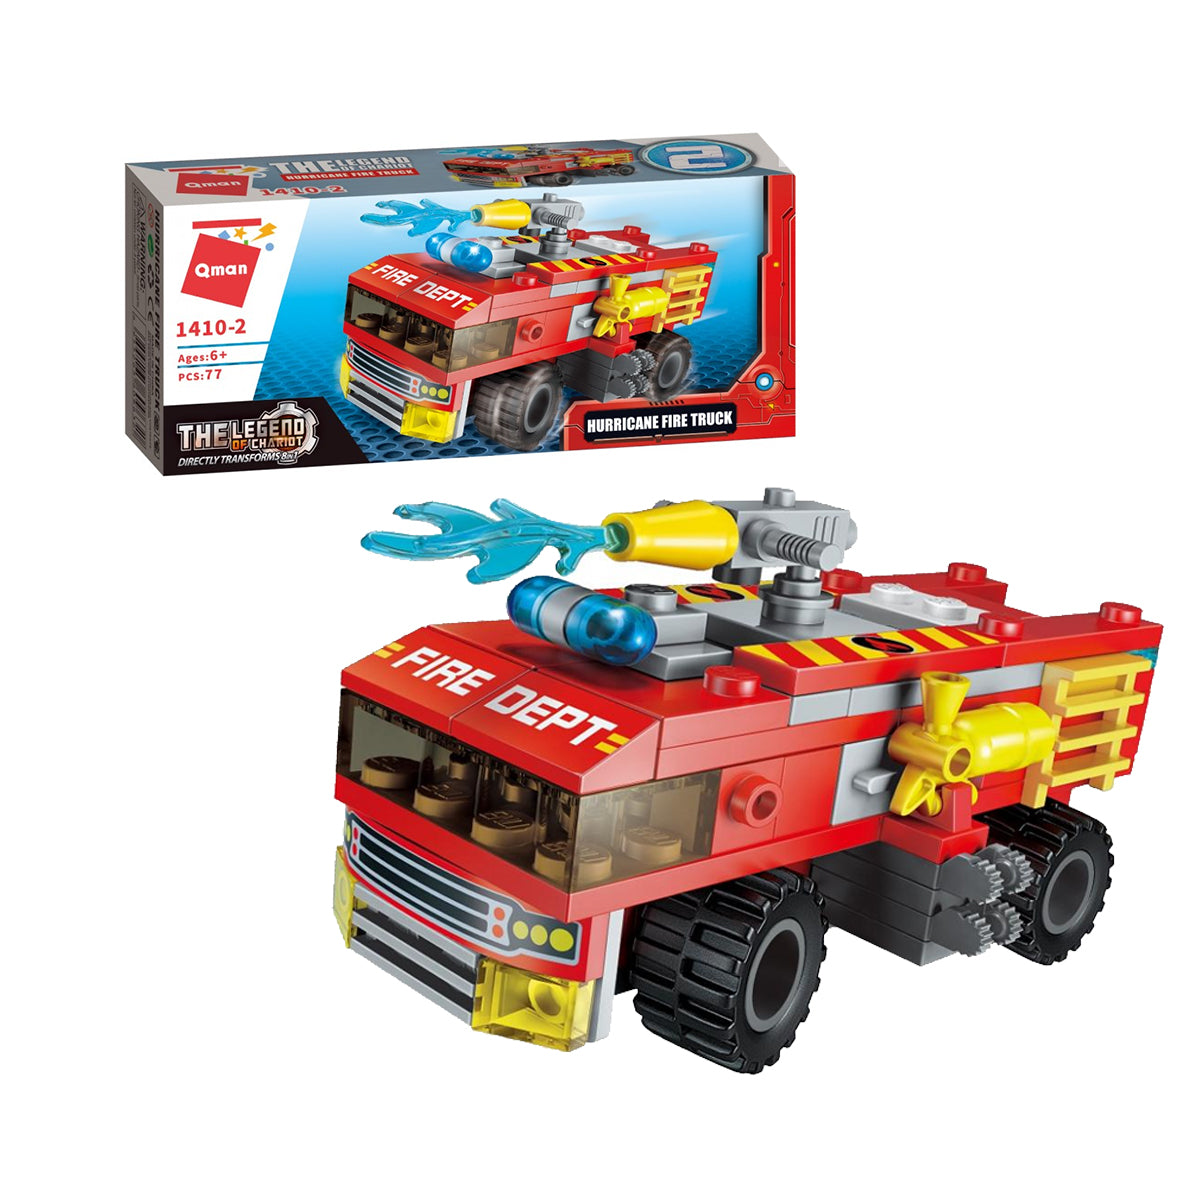 Qman The Legend of Chariot: Hurricane Fire Truck (7681411252448)